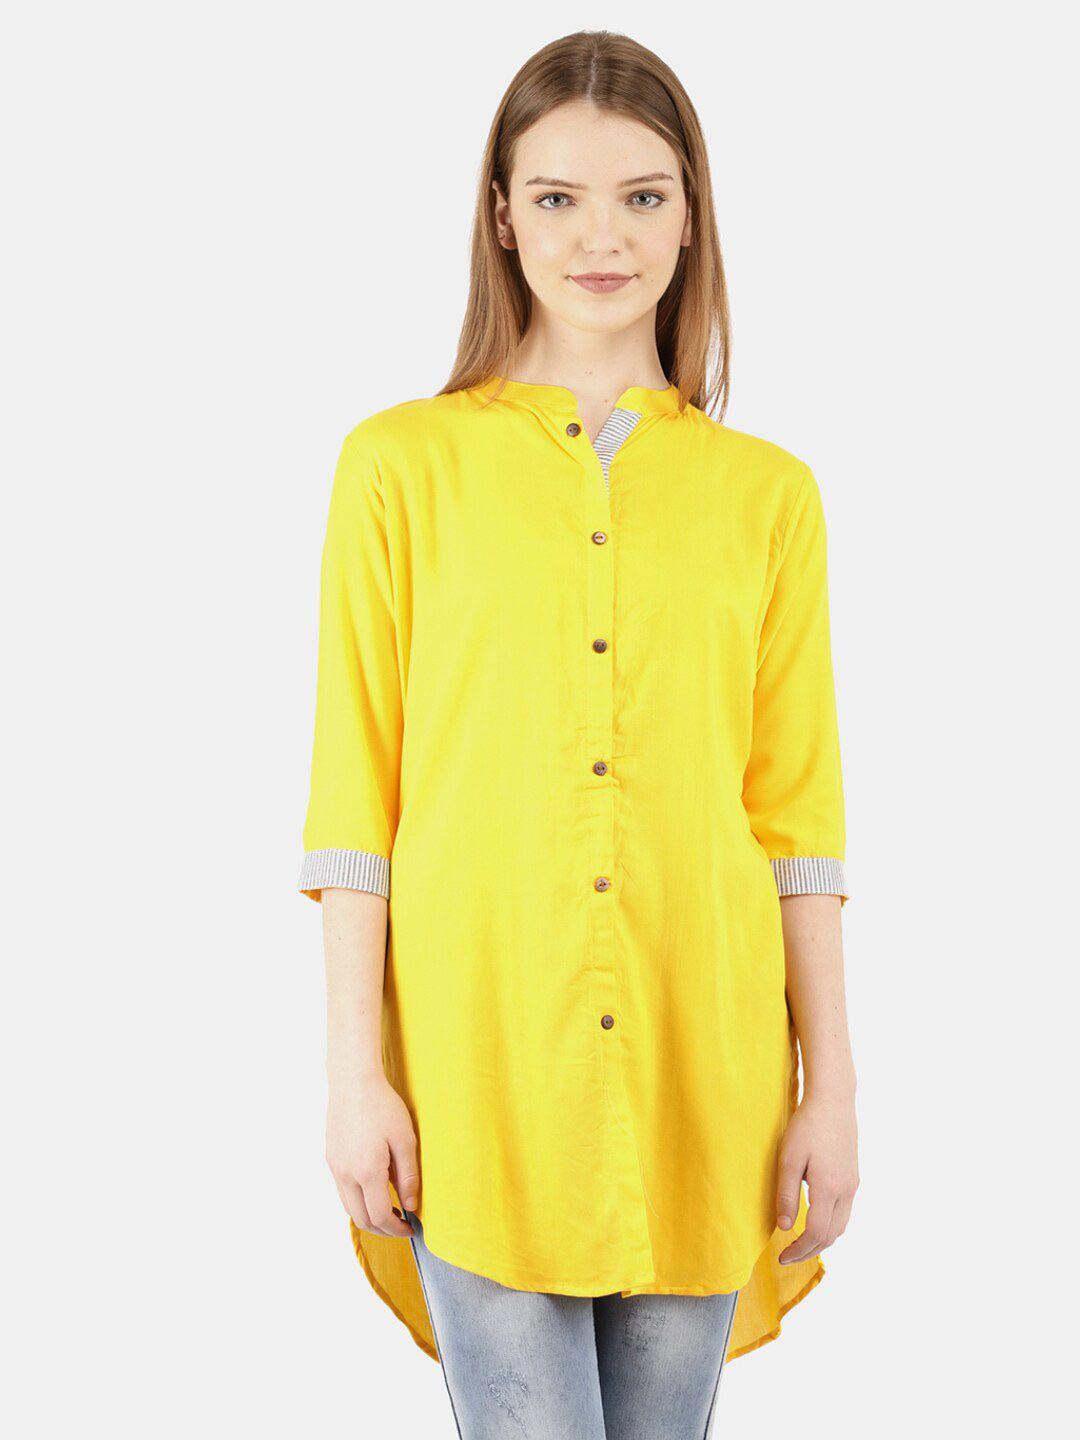 v-mart women solid mustard yellow mandarin collar shirt style high-low top